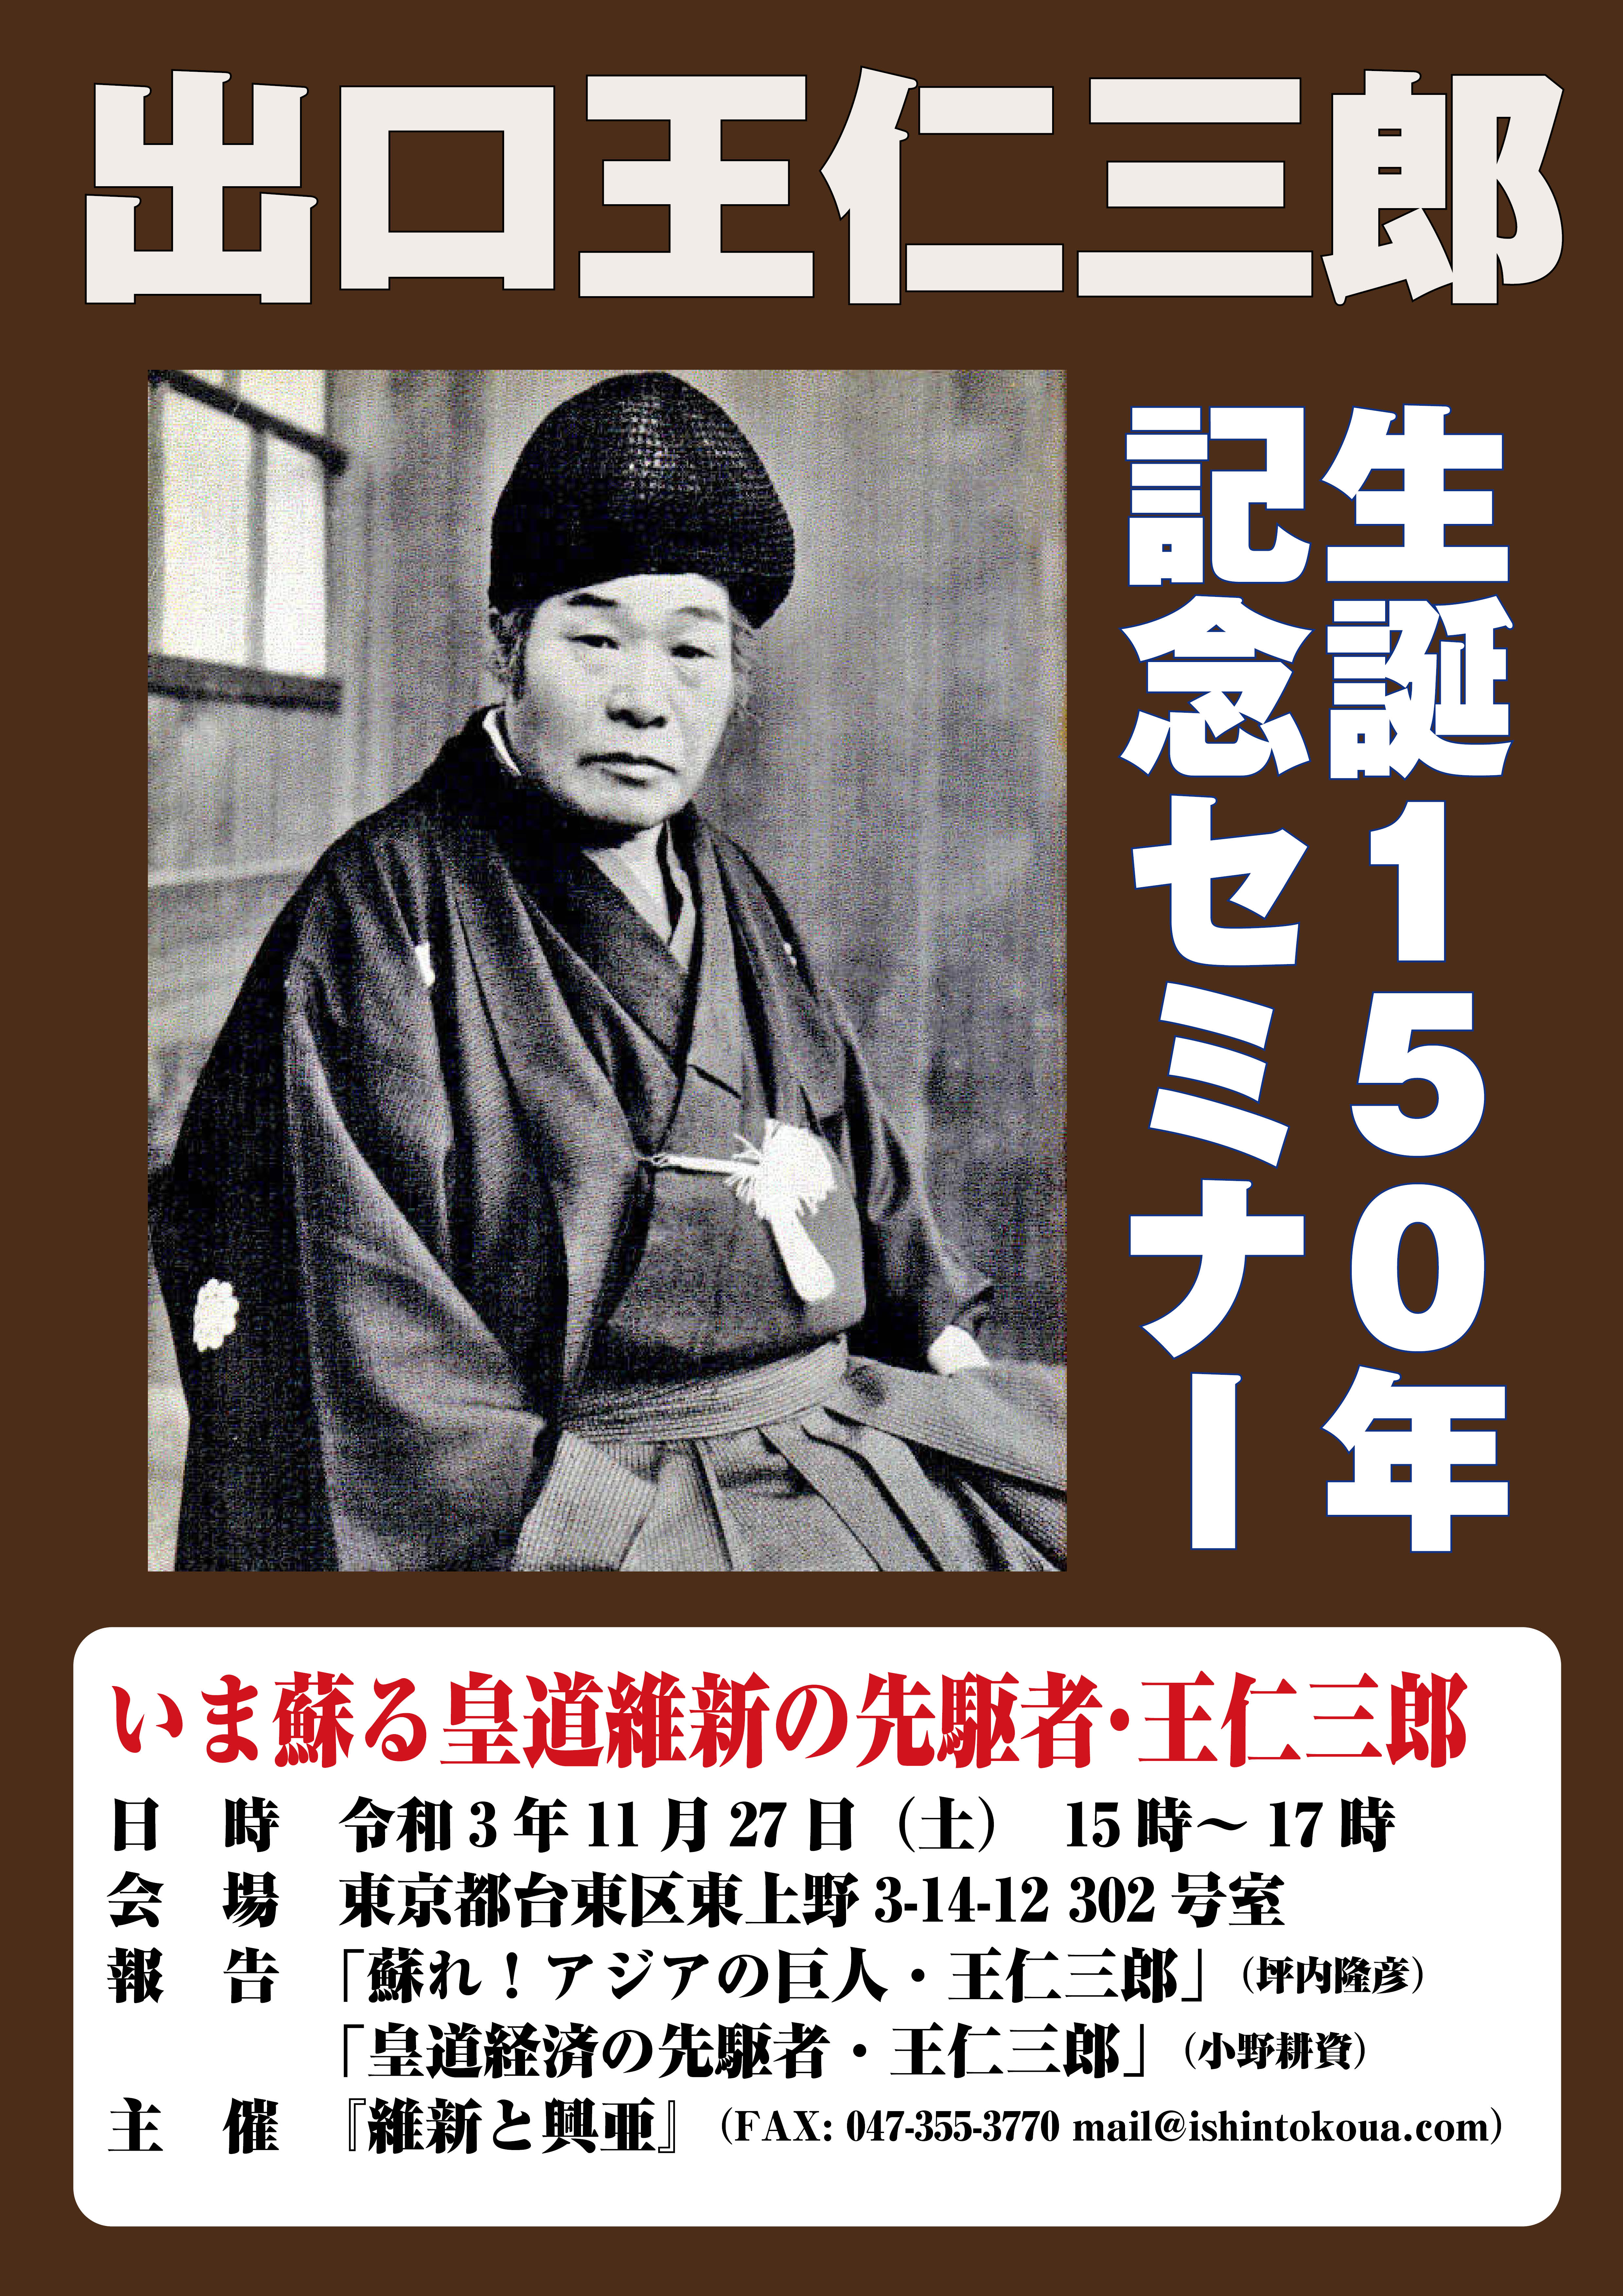 「出口王仁三郎生誕150年記念セミナー」